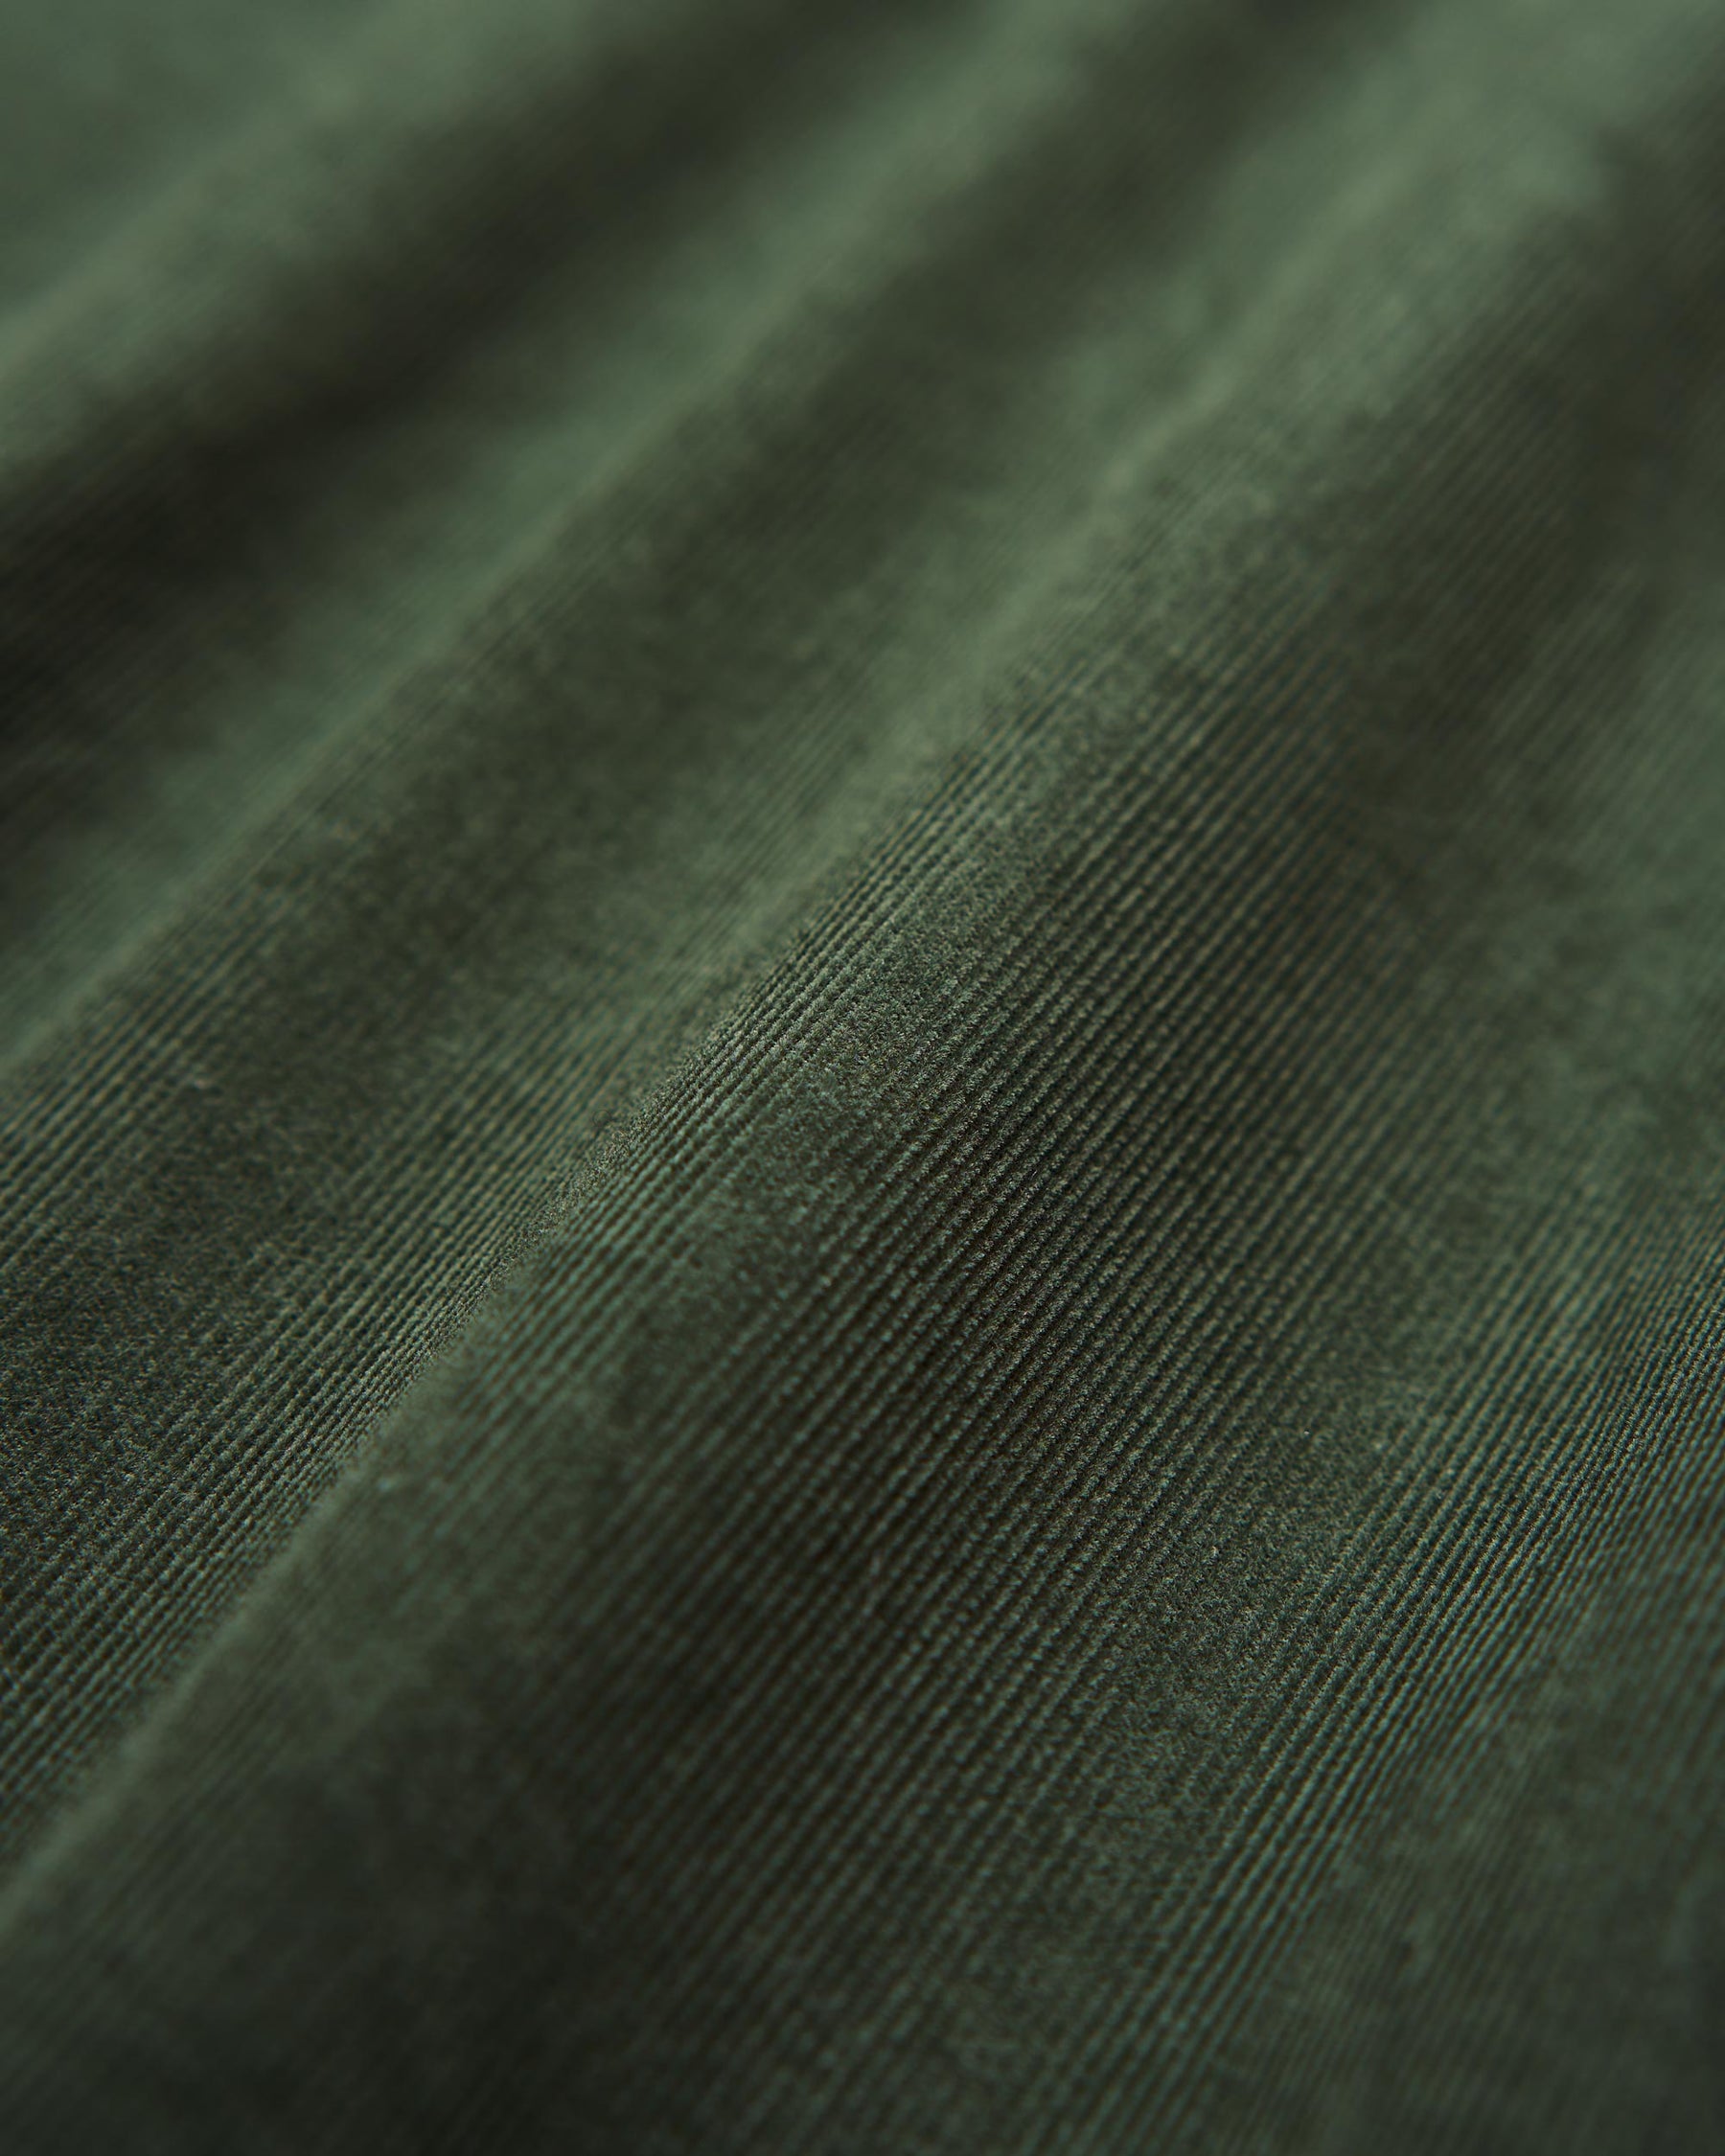 Atom Cord Shirt - Green